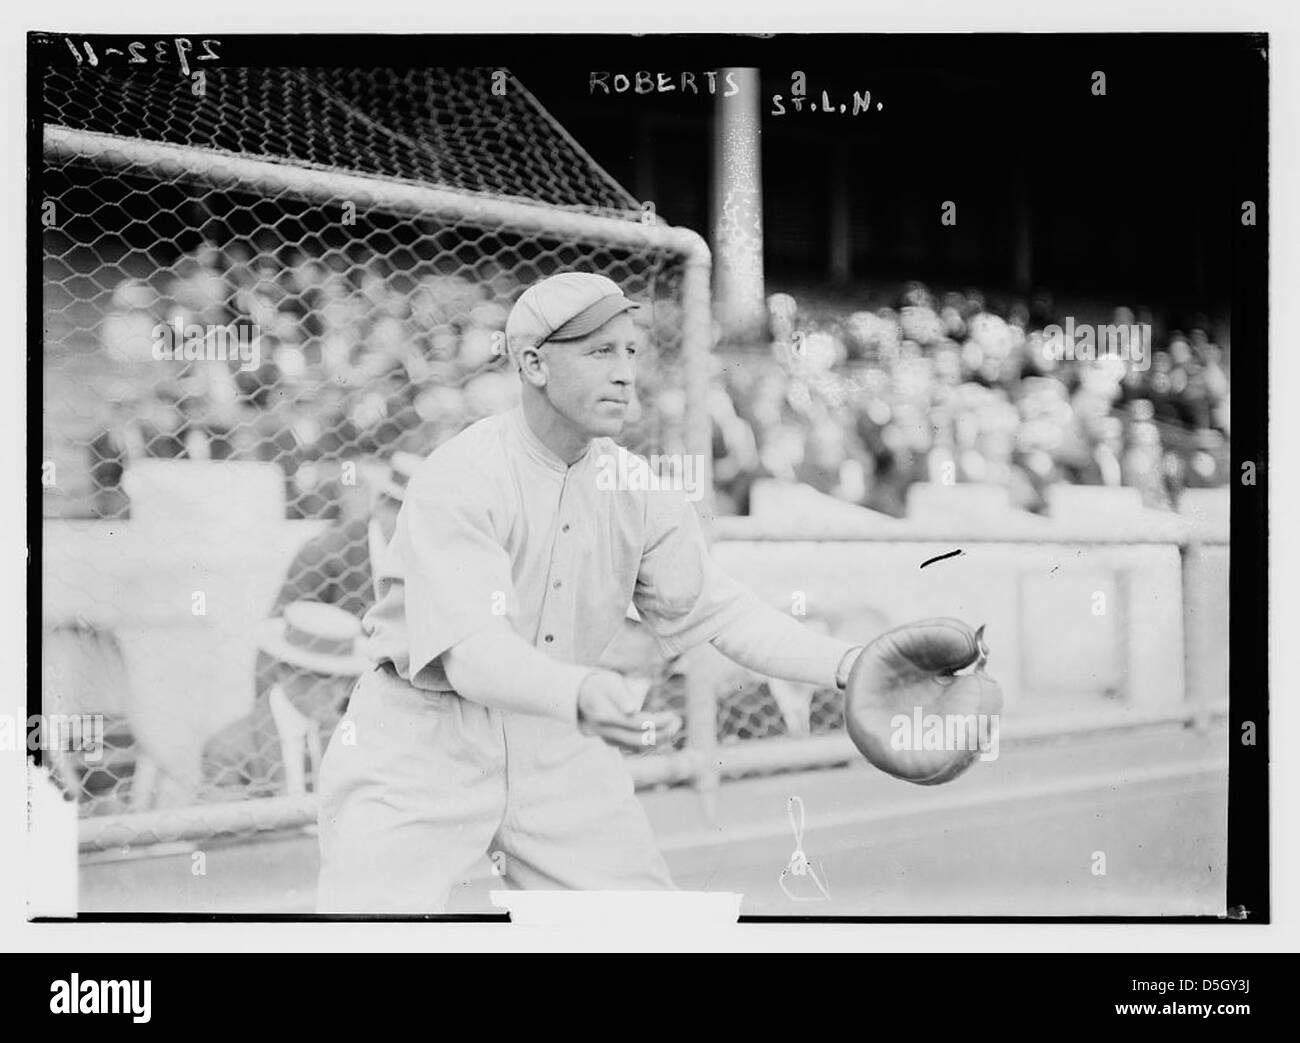 [Clarence 'Skipper' Roberts, Saint Louis NL (baseball)] (LOC) Banque D'Images